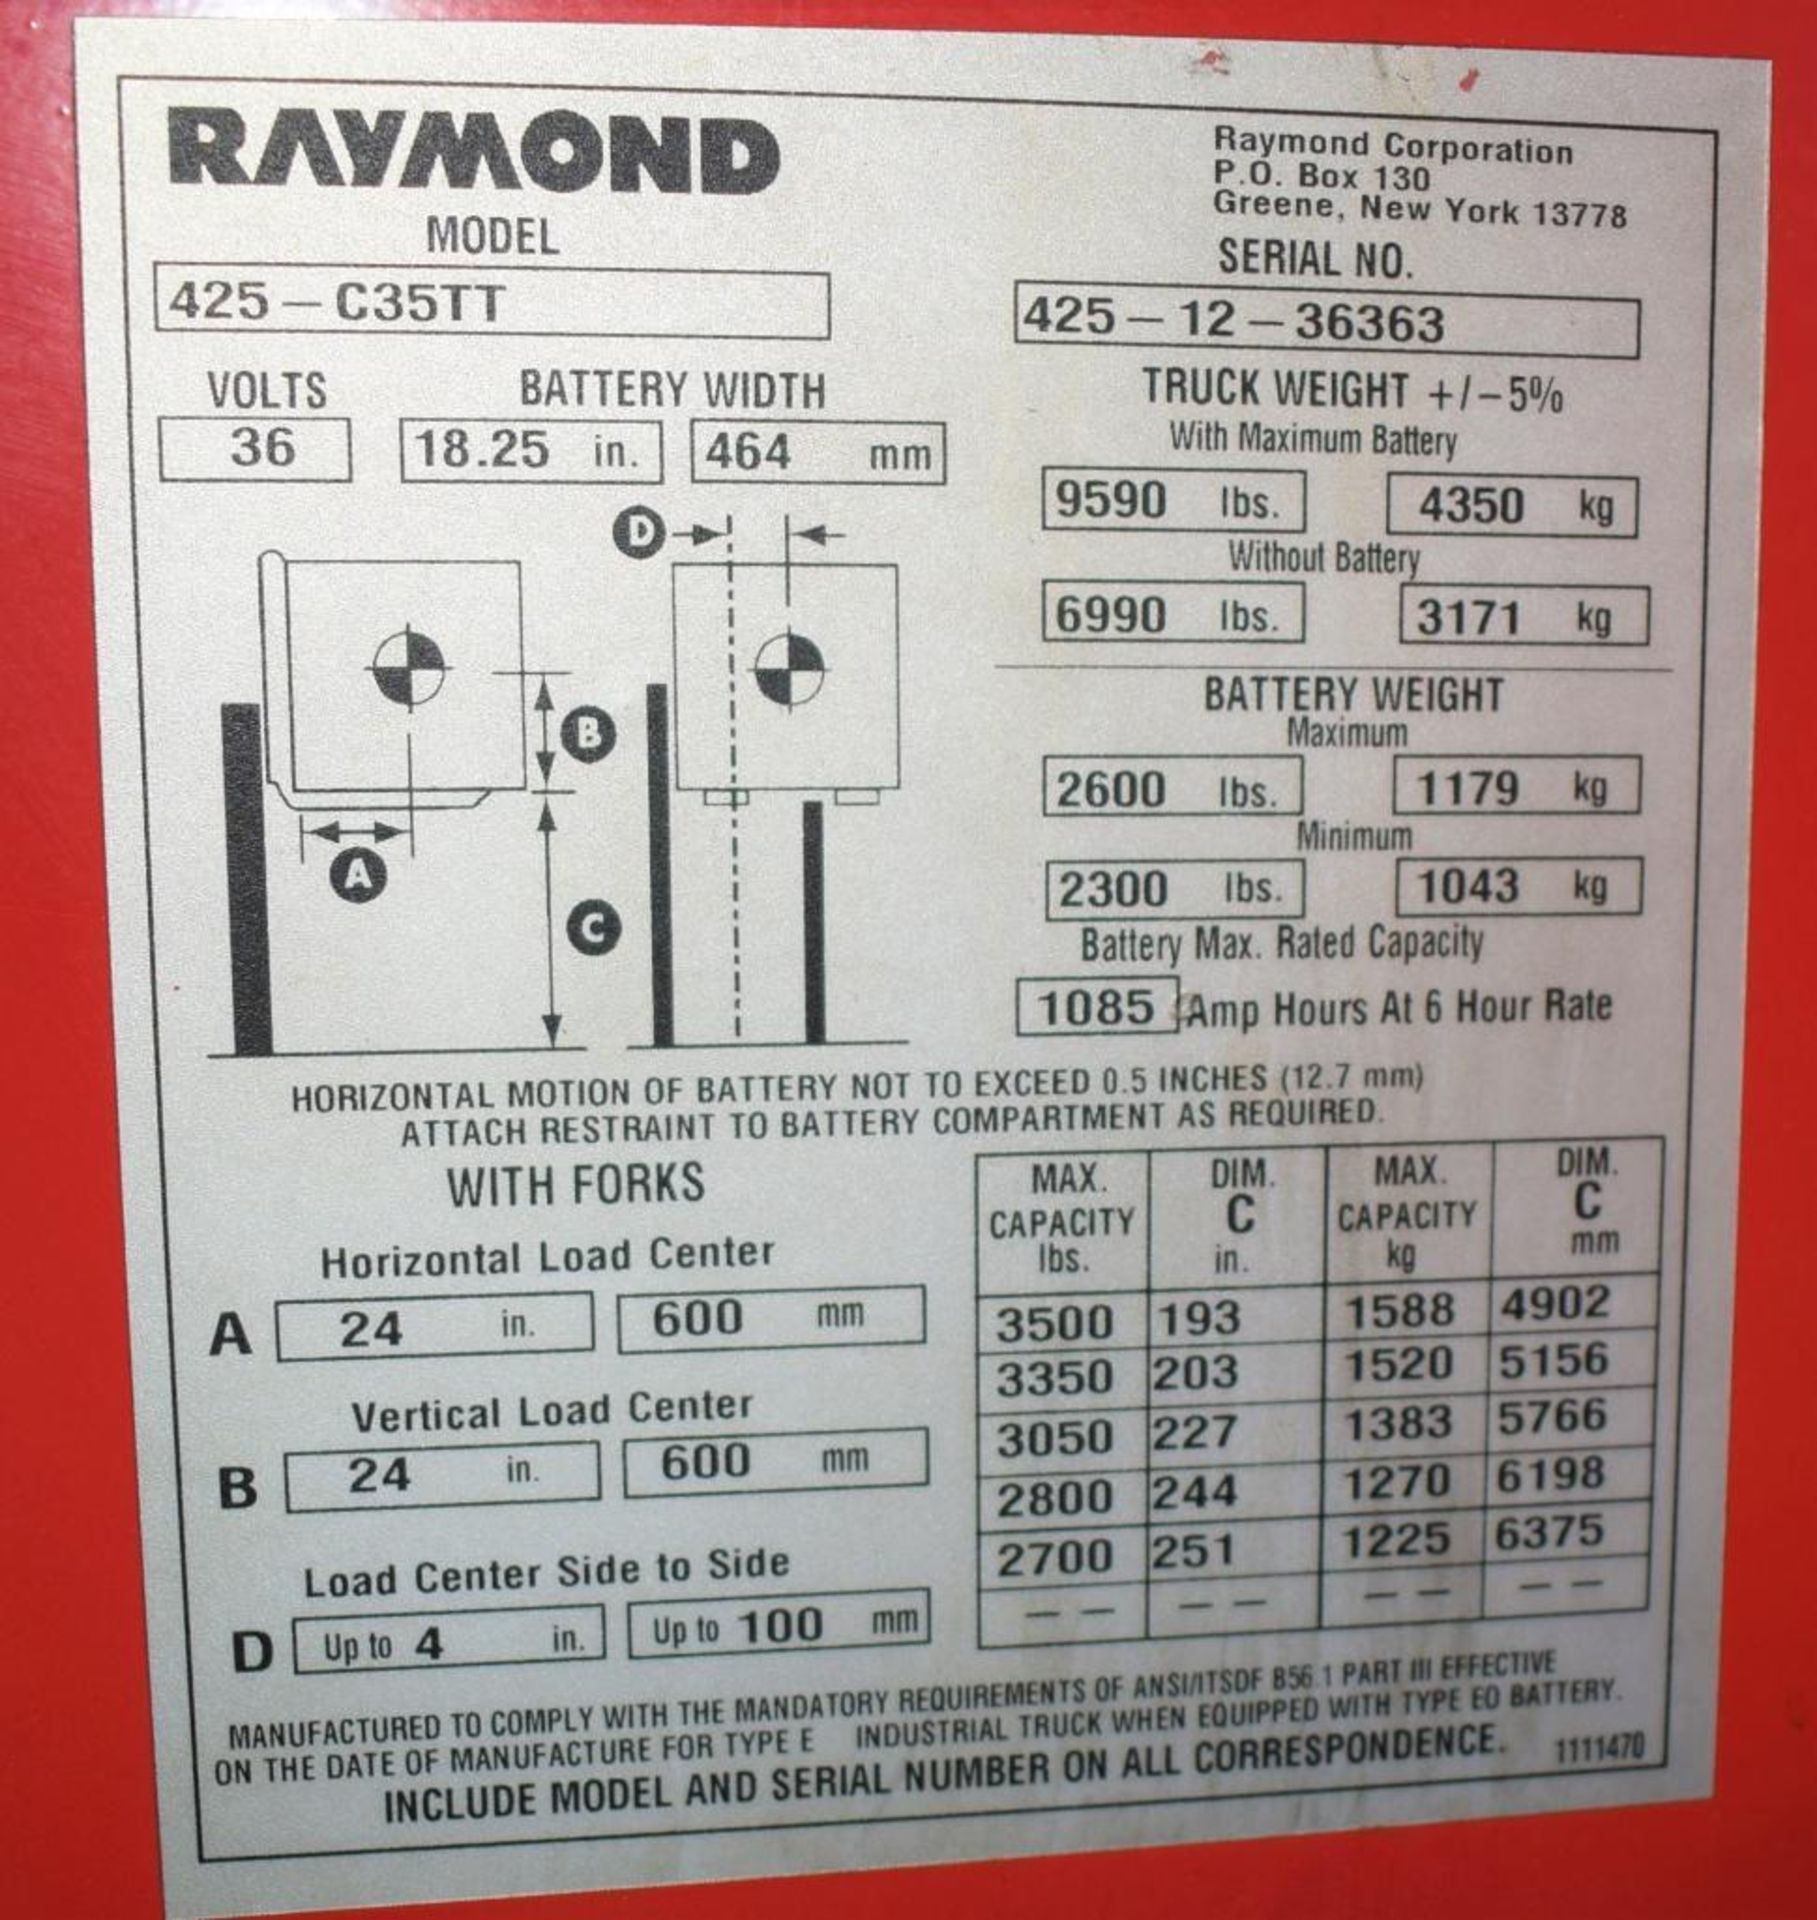 Raymond Stand-Up Counterbalanced Lift Truck, Model 425-C35TT, Serial# 425-12-36363. 36 Volts, maximu - Image 16 of 20